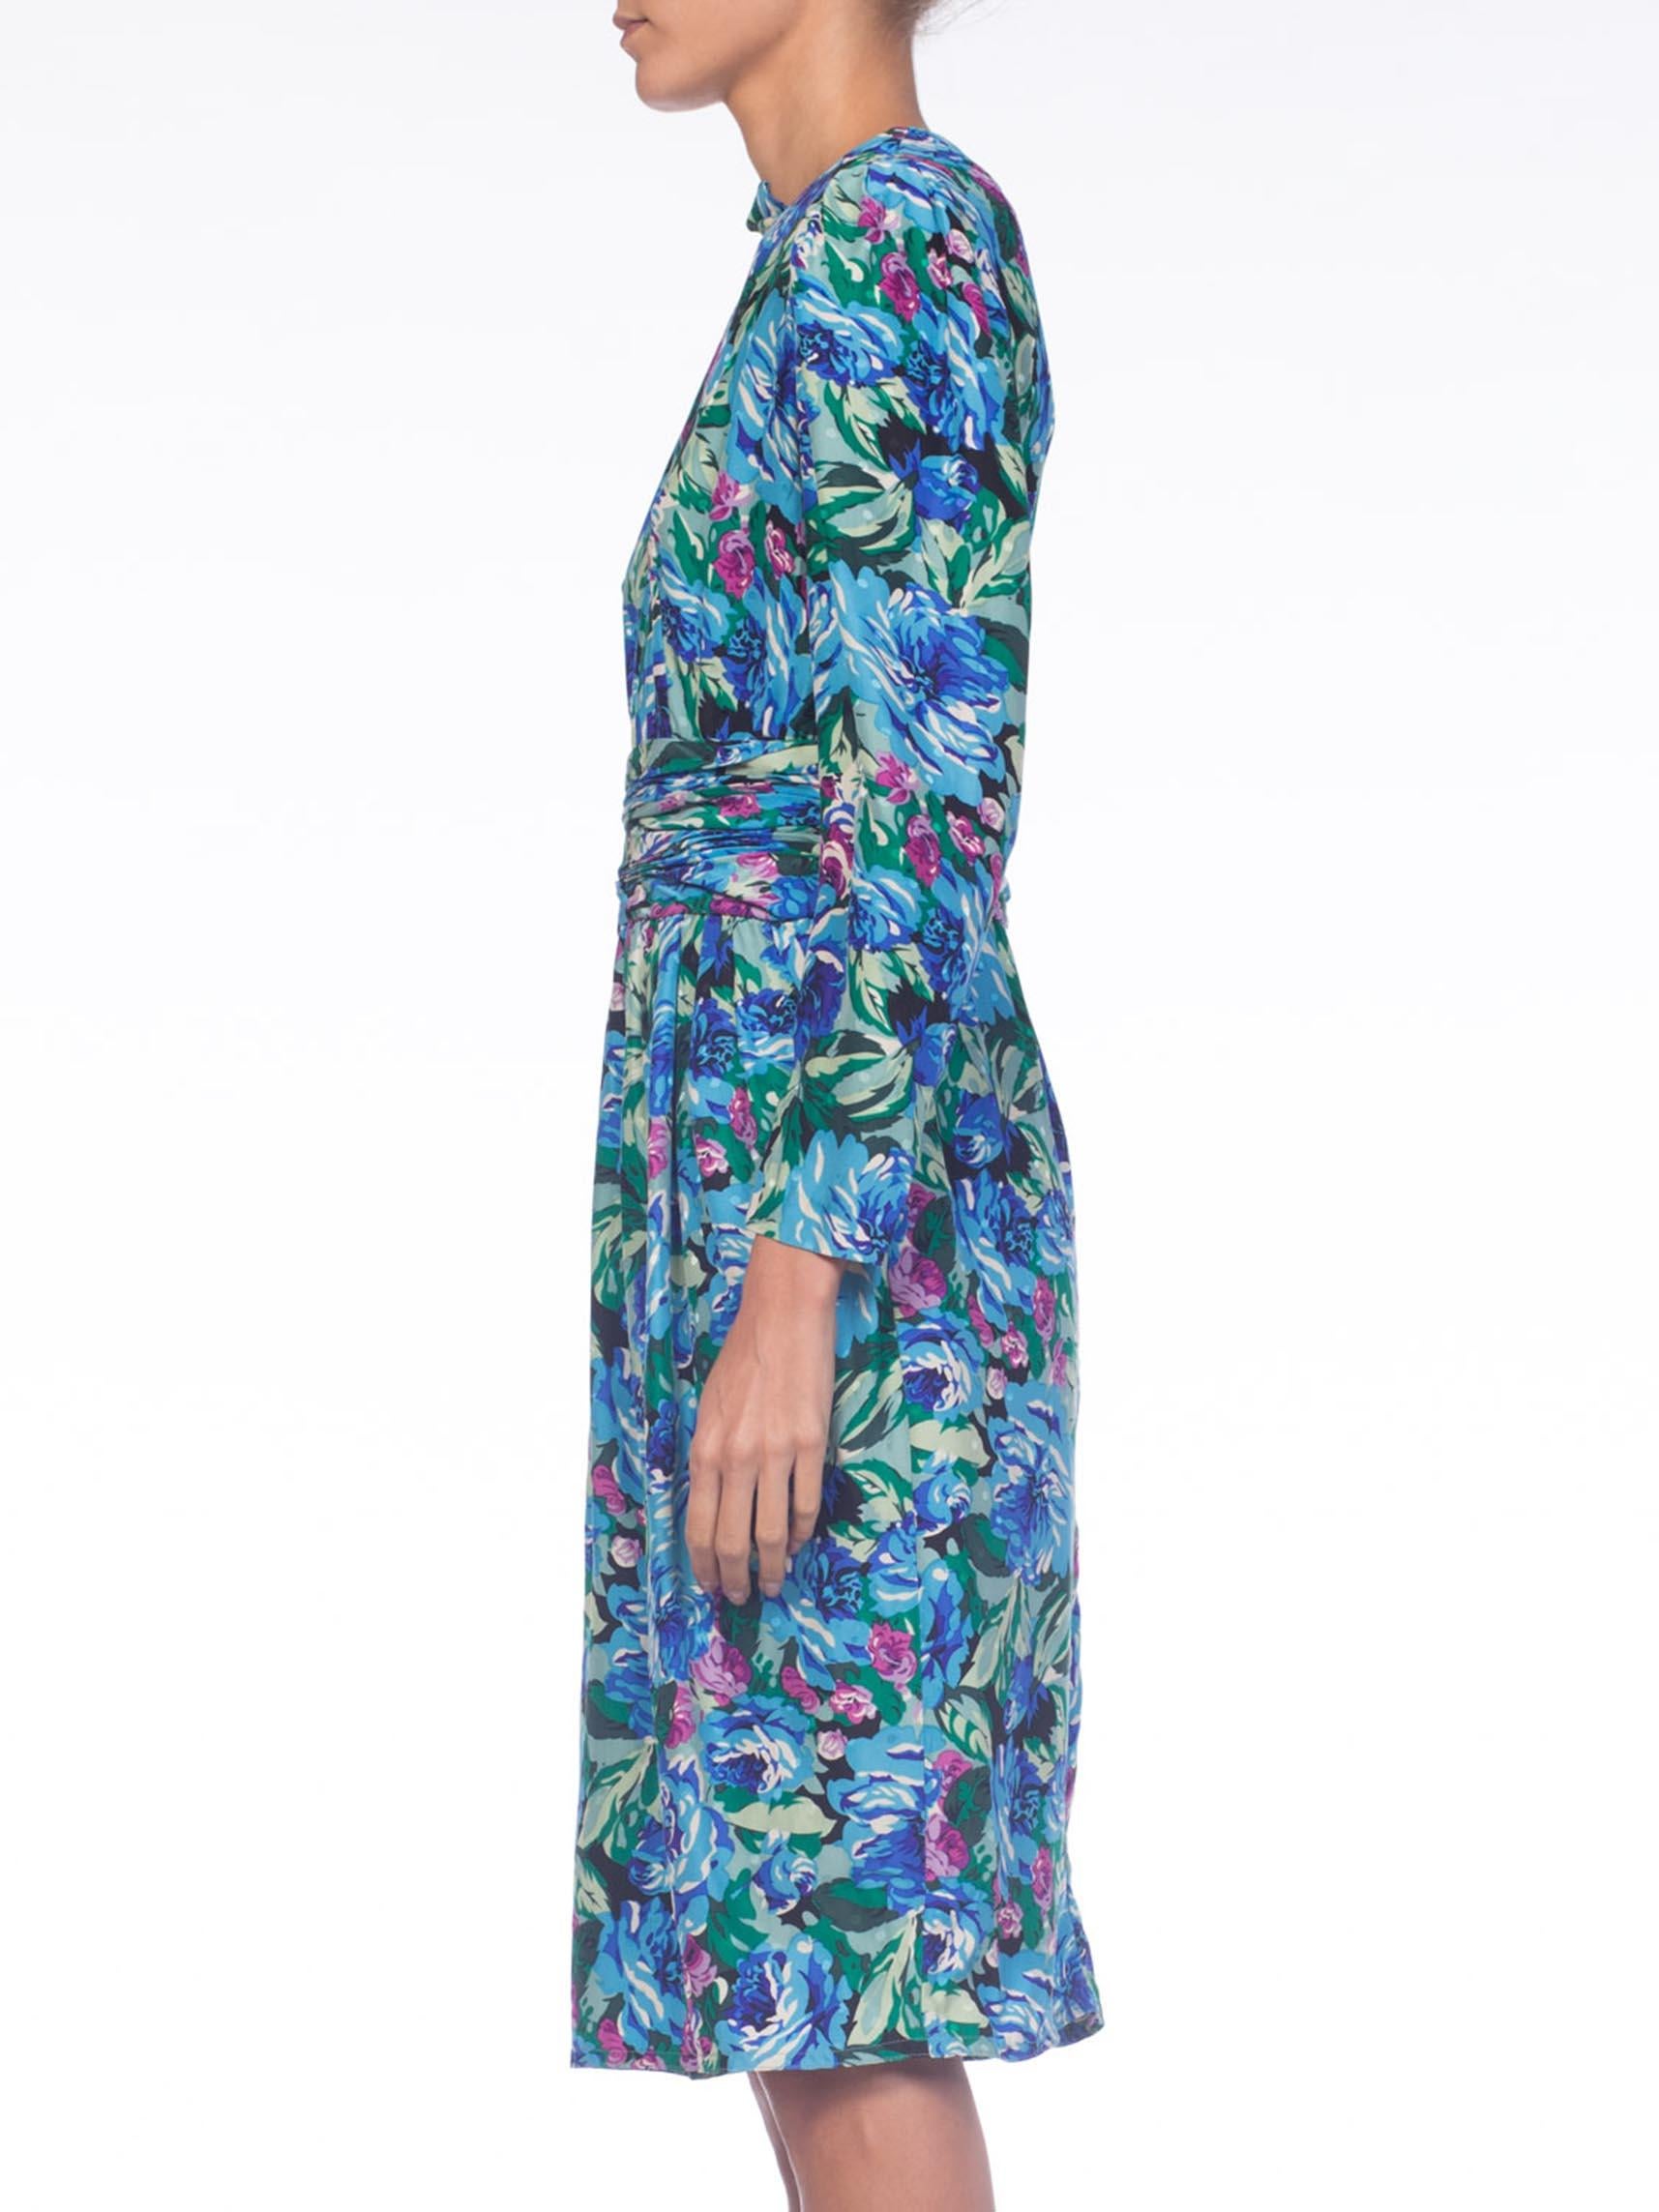 Women's 1980S EMANUEL UNGARO Style Blue Floral Silk Jacquard Long Sleeve Dress For Sale